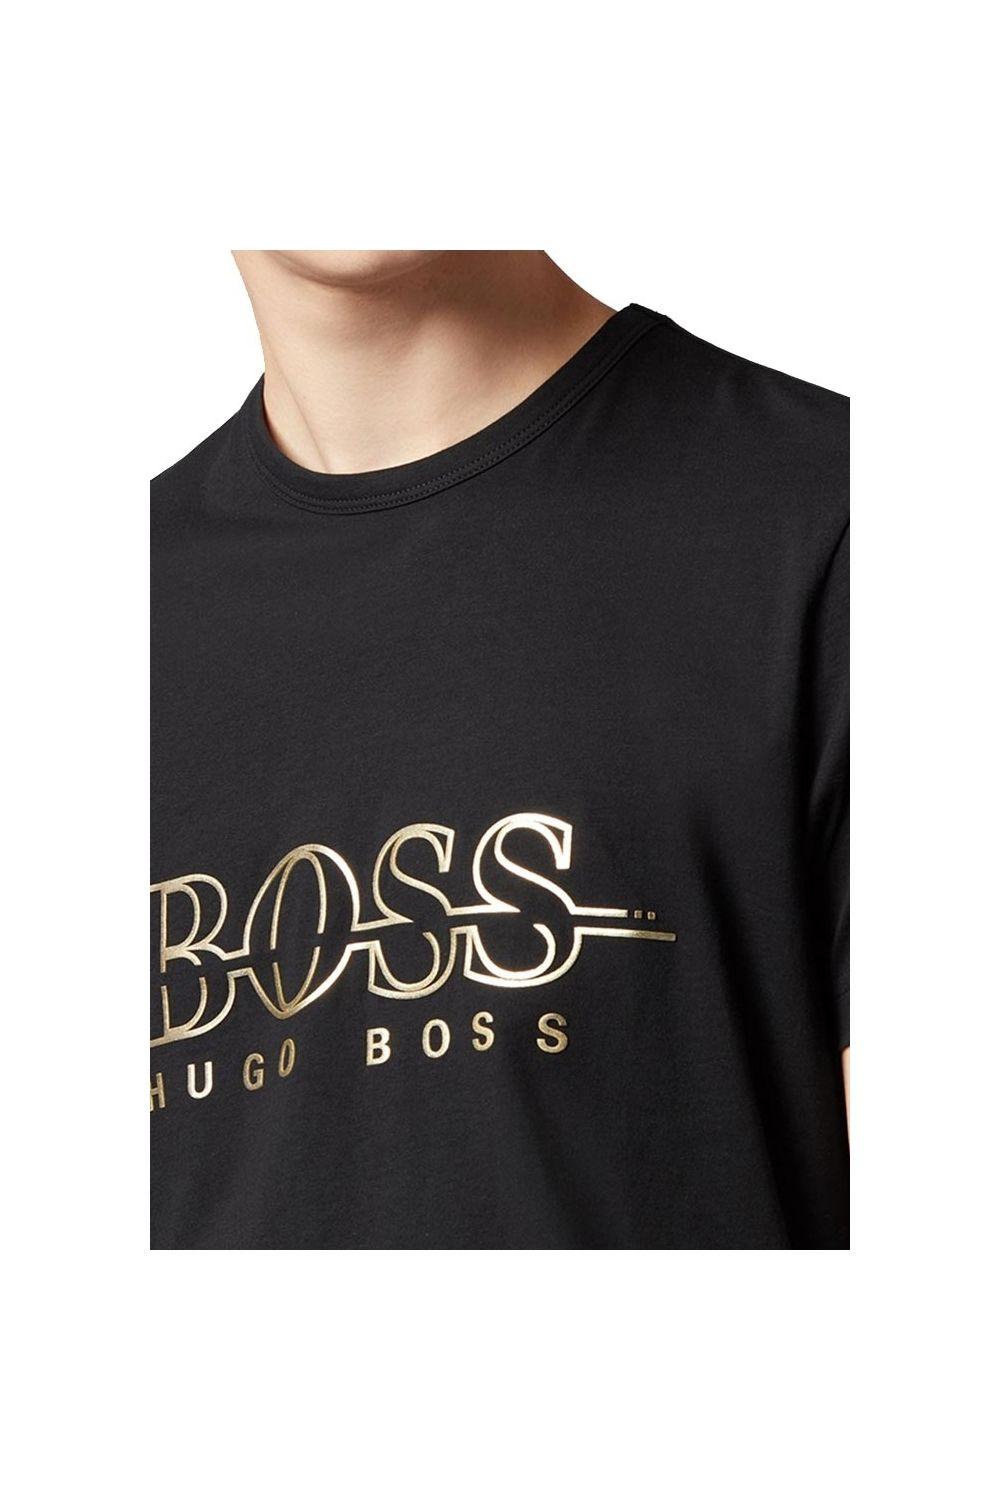 Green Black and Gold Logo - Hugo Boss Green Big Logo Regular Fit T-shirt Black/gold - Clothing ...